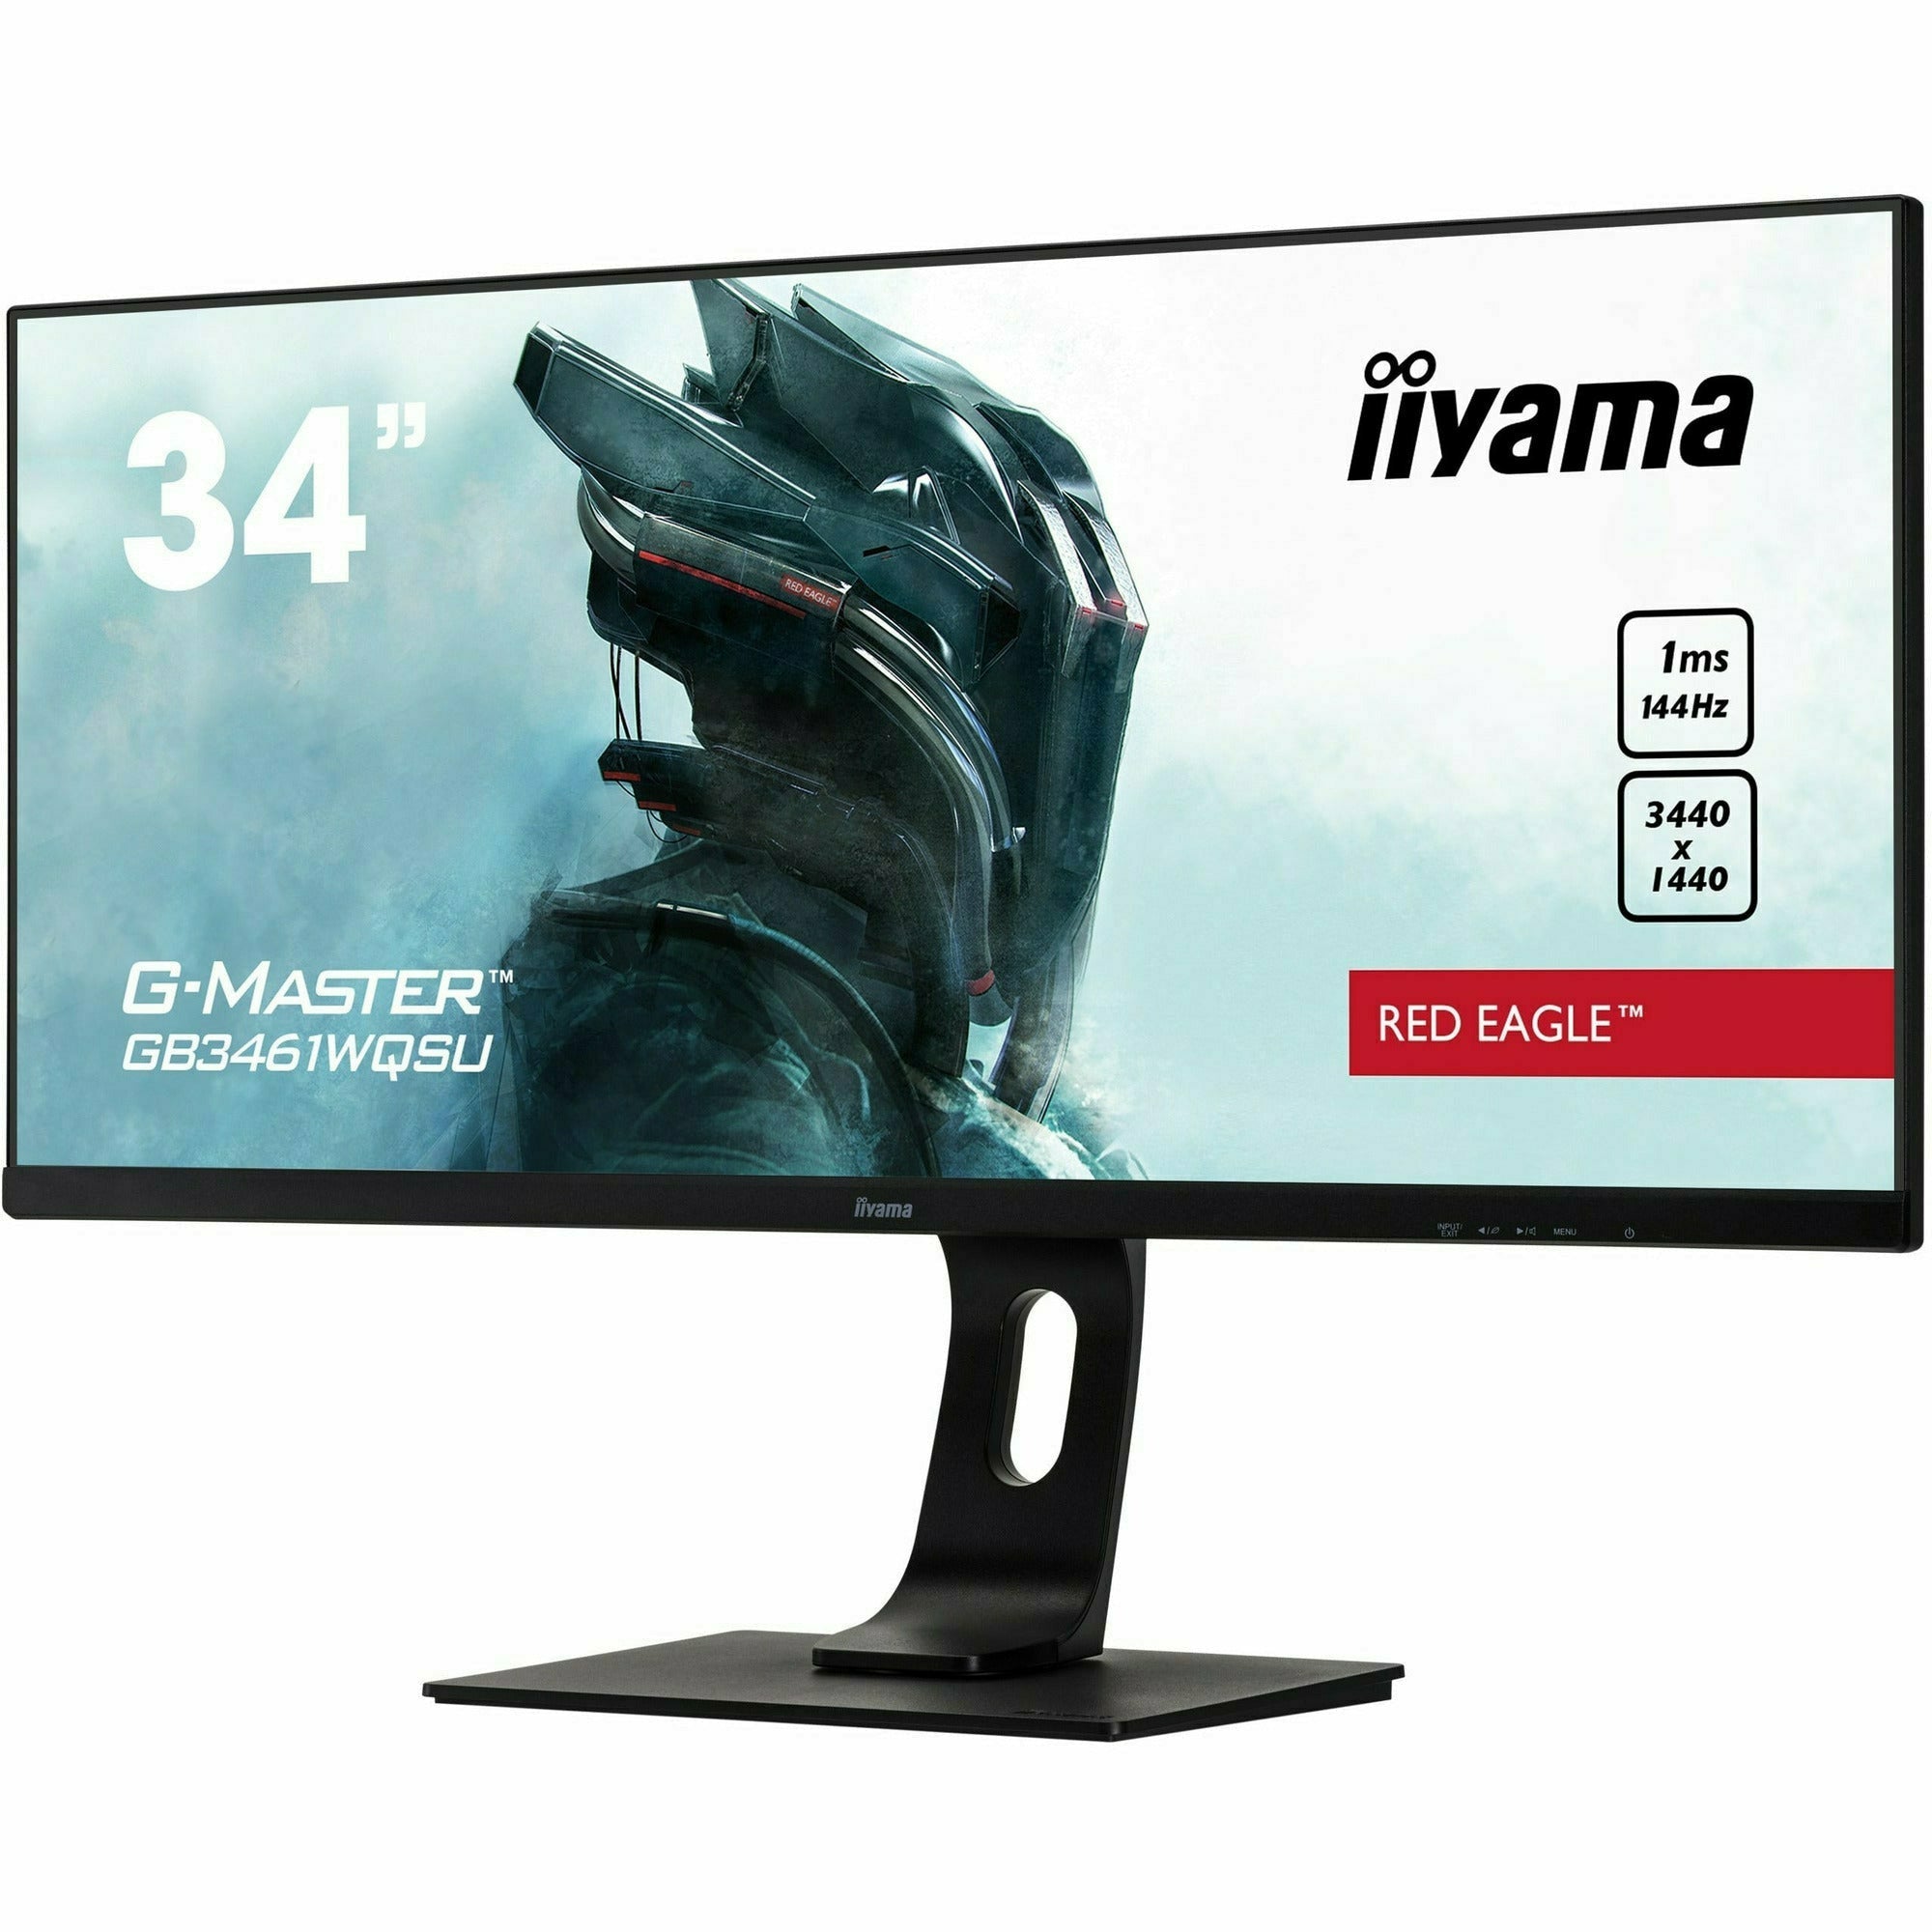 iiyama G-Master GB3461WQSU-B1 34" 21:9 Ultra Wide ADS-IPS LCD